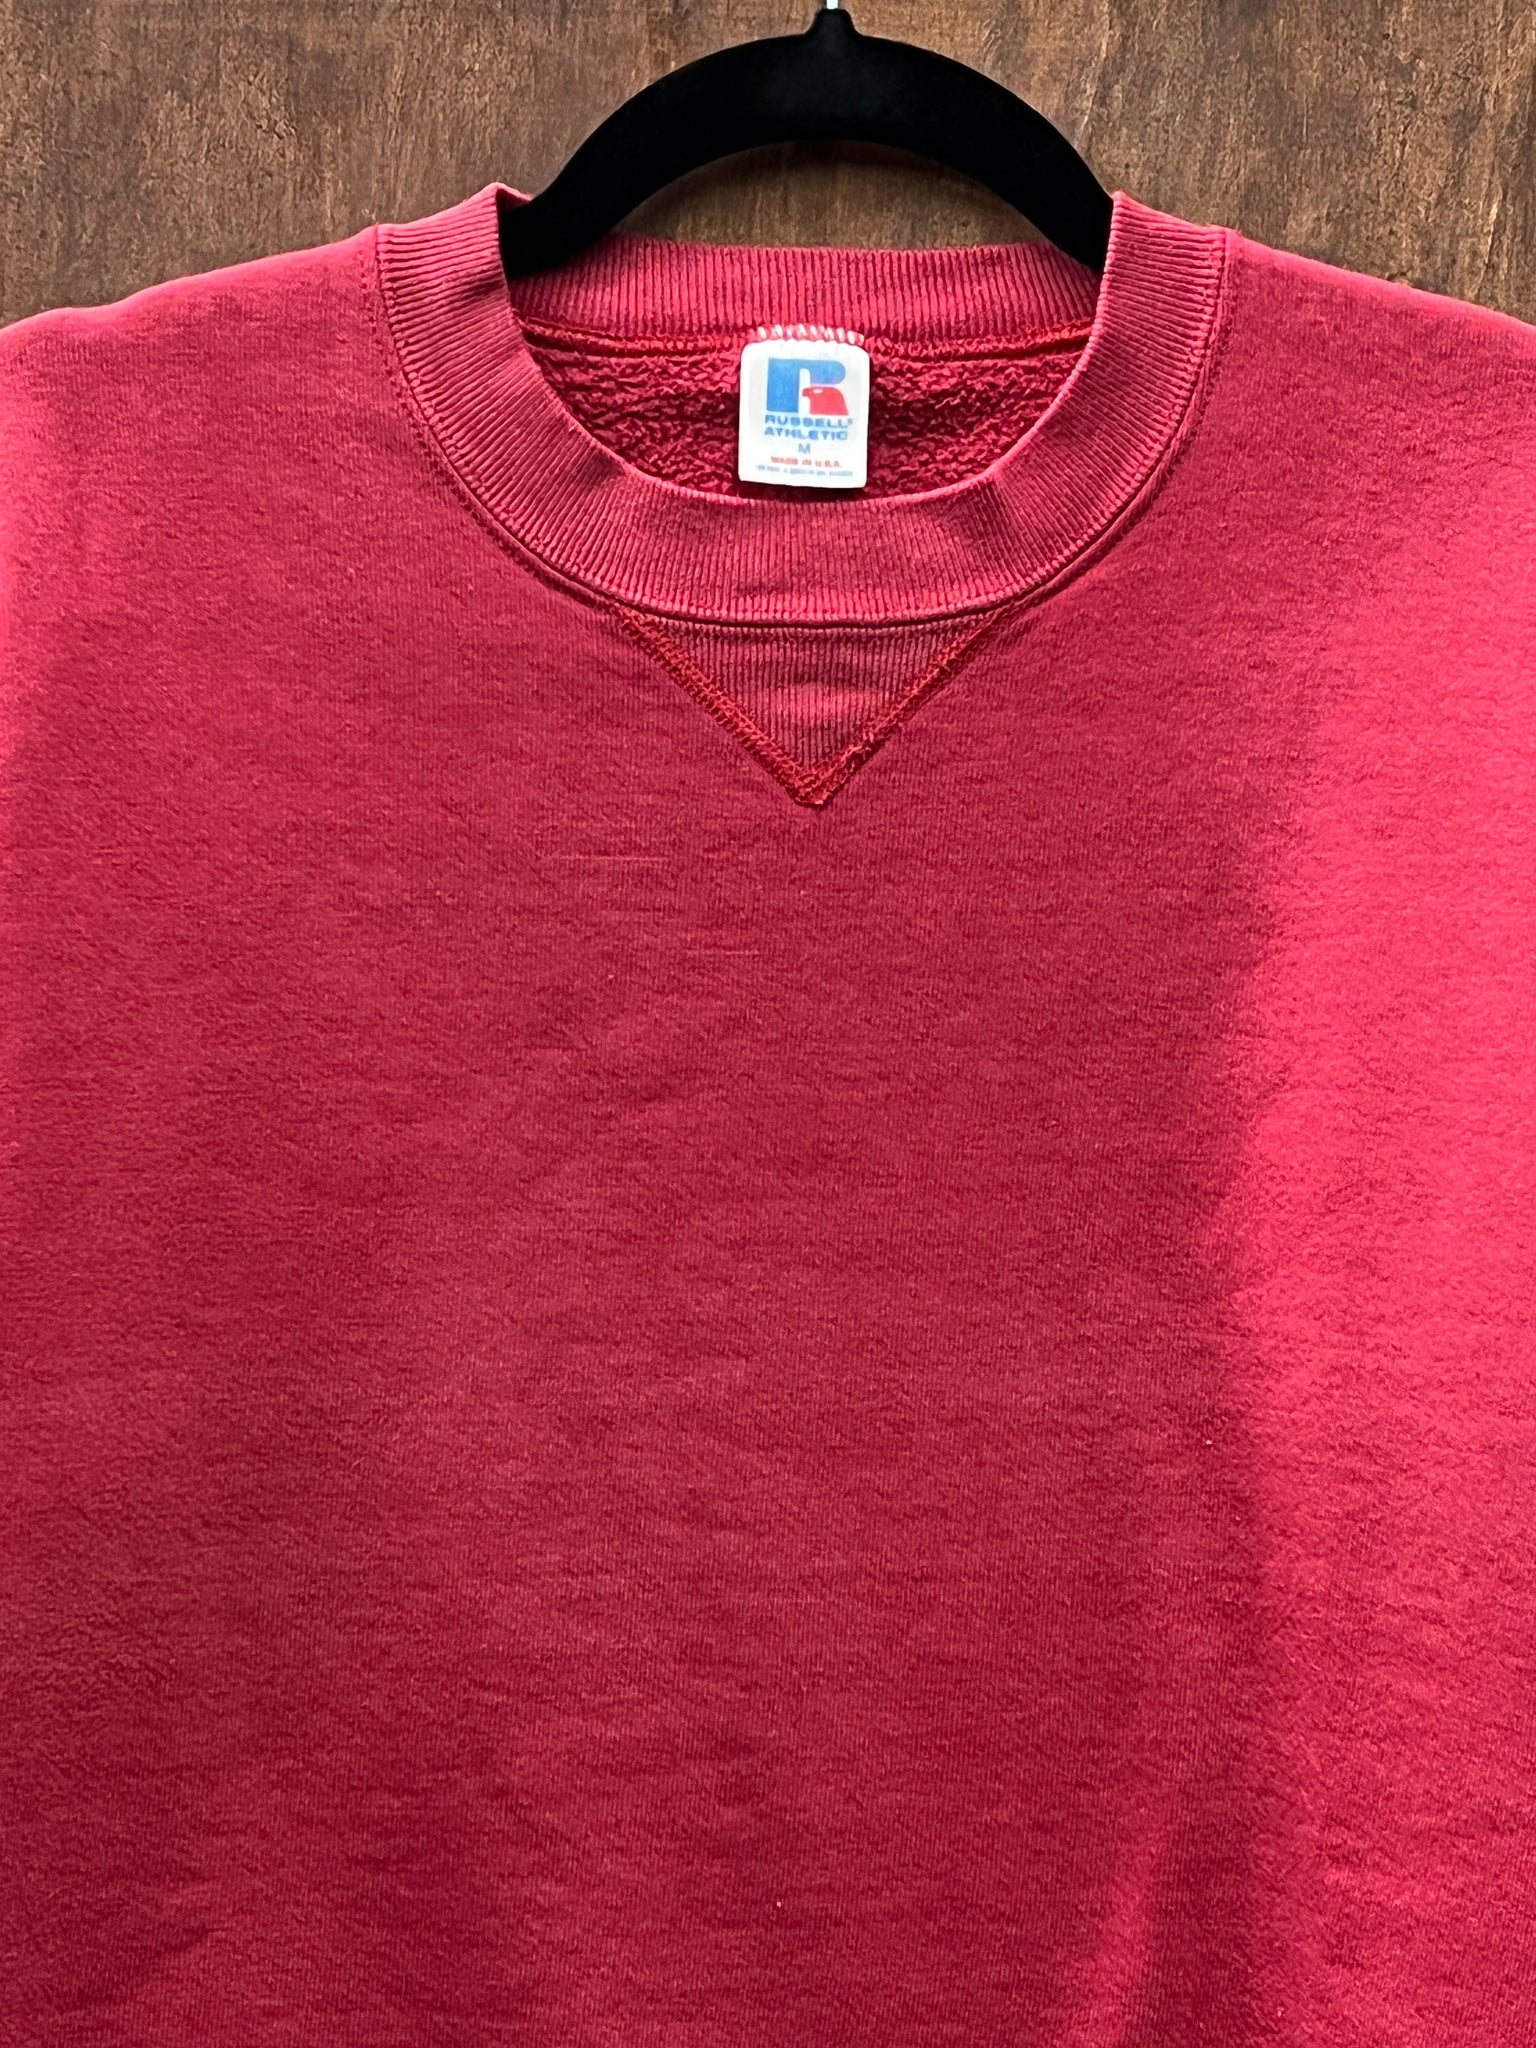 1990s MENS T SHIRT- Russell sweatshirt raspberry red